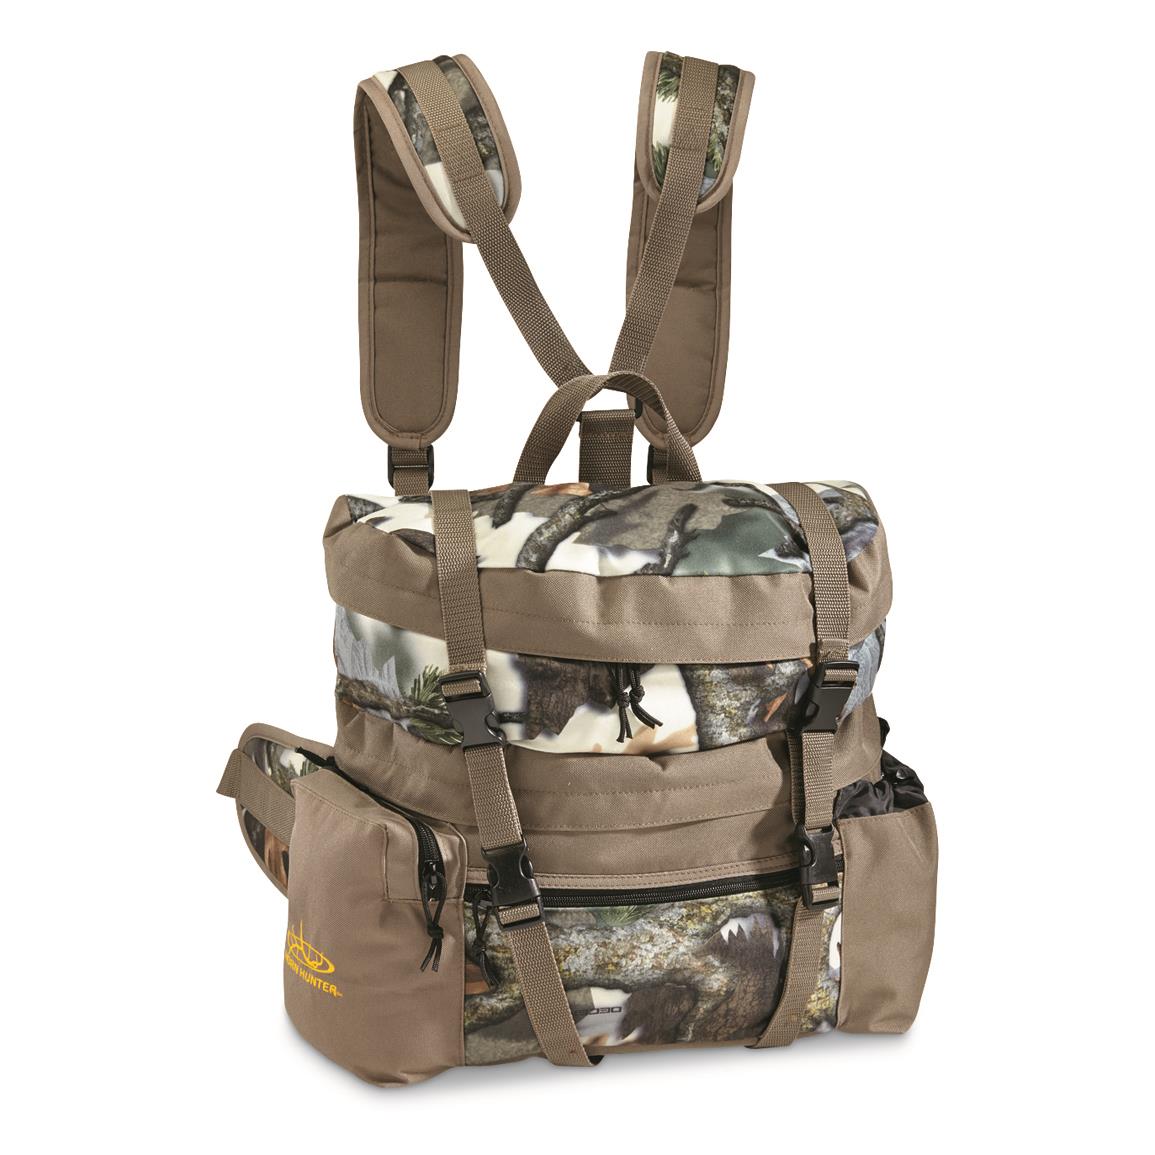 Predator Hunting Backpack Cheap Online